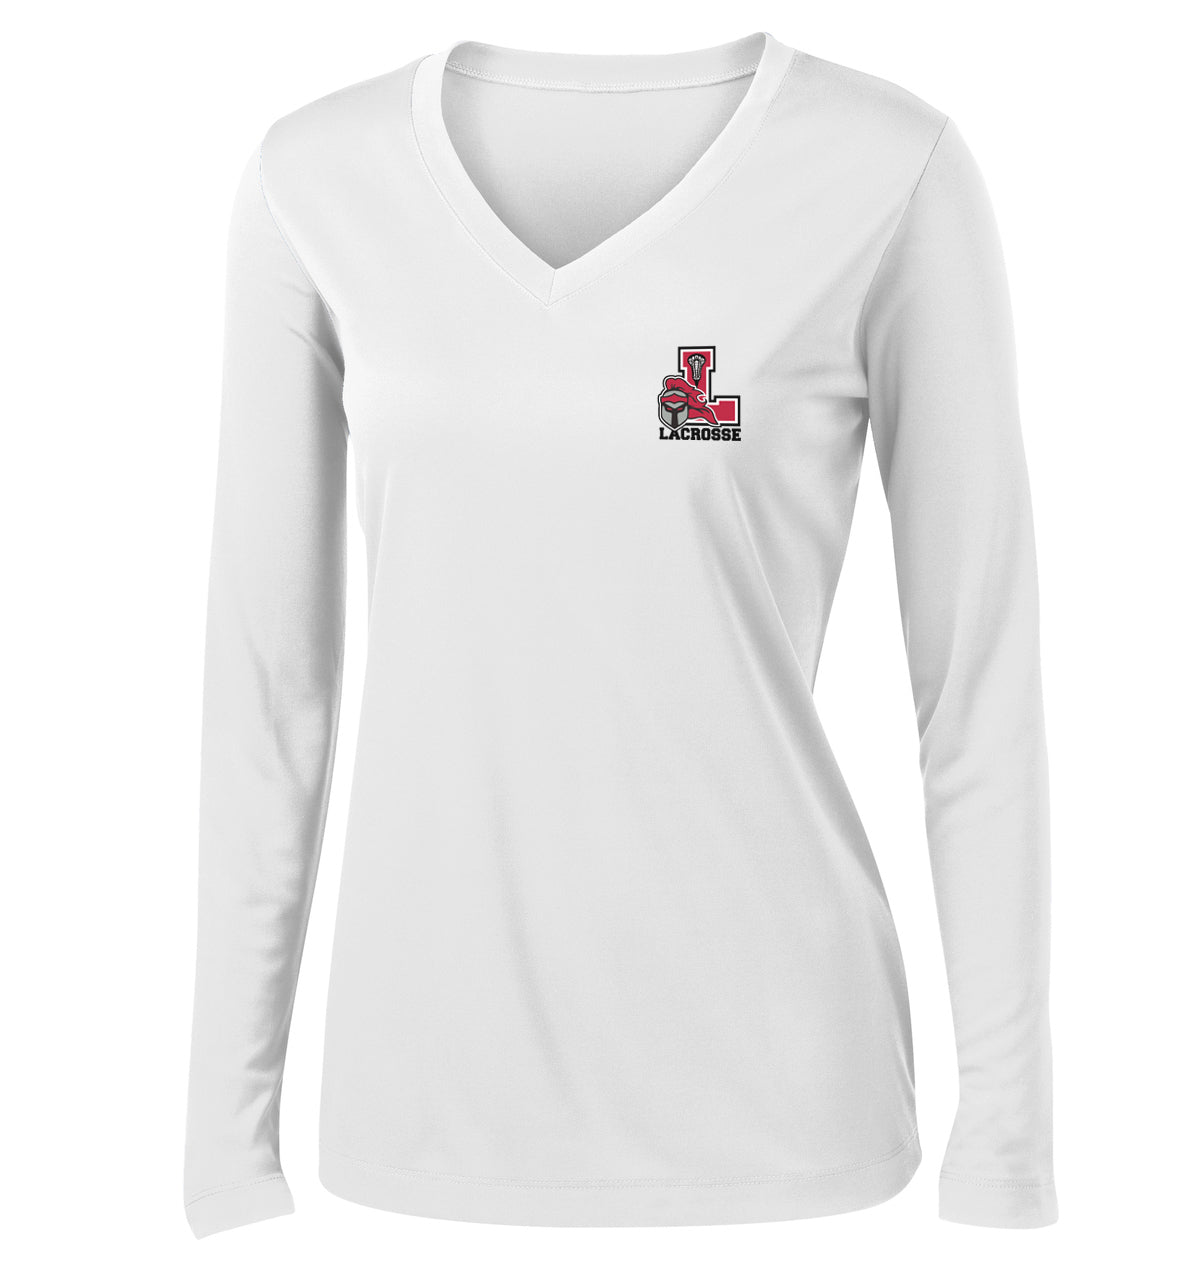 Lancaster Legends Lacrosse Women's White Long Sleeve Performance Shirt